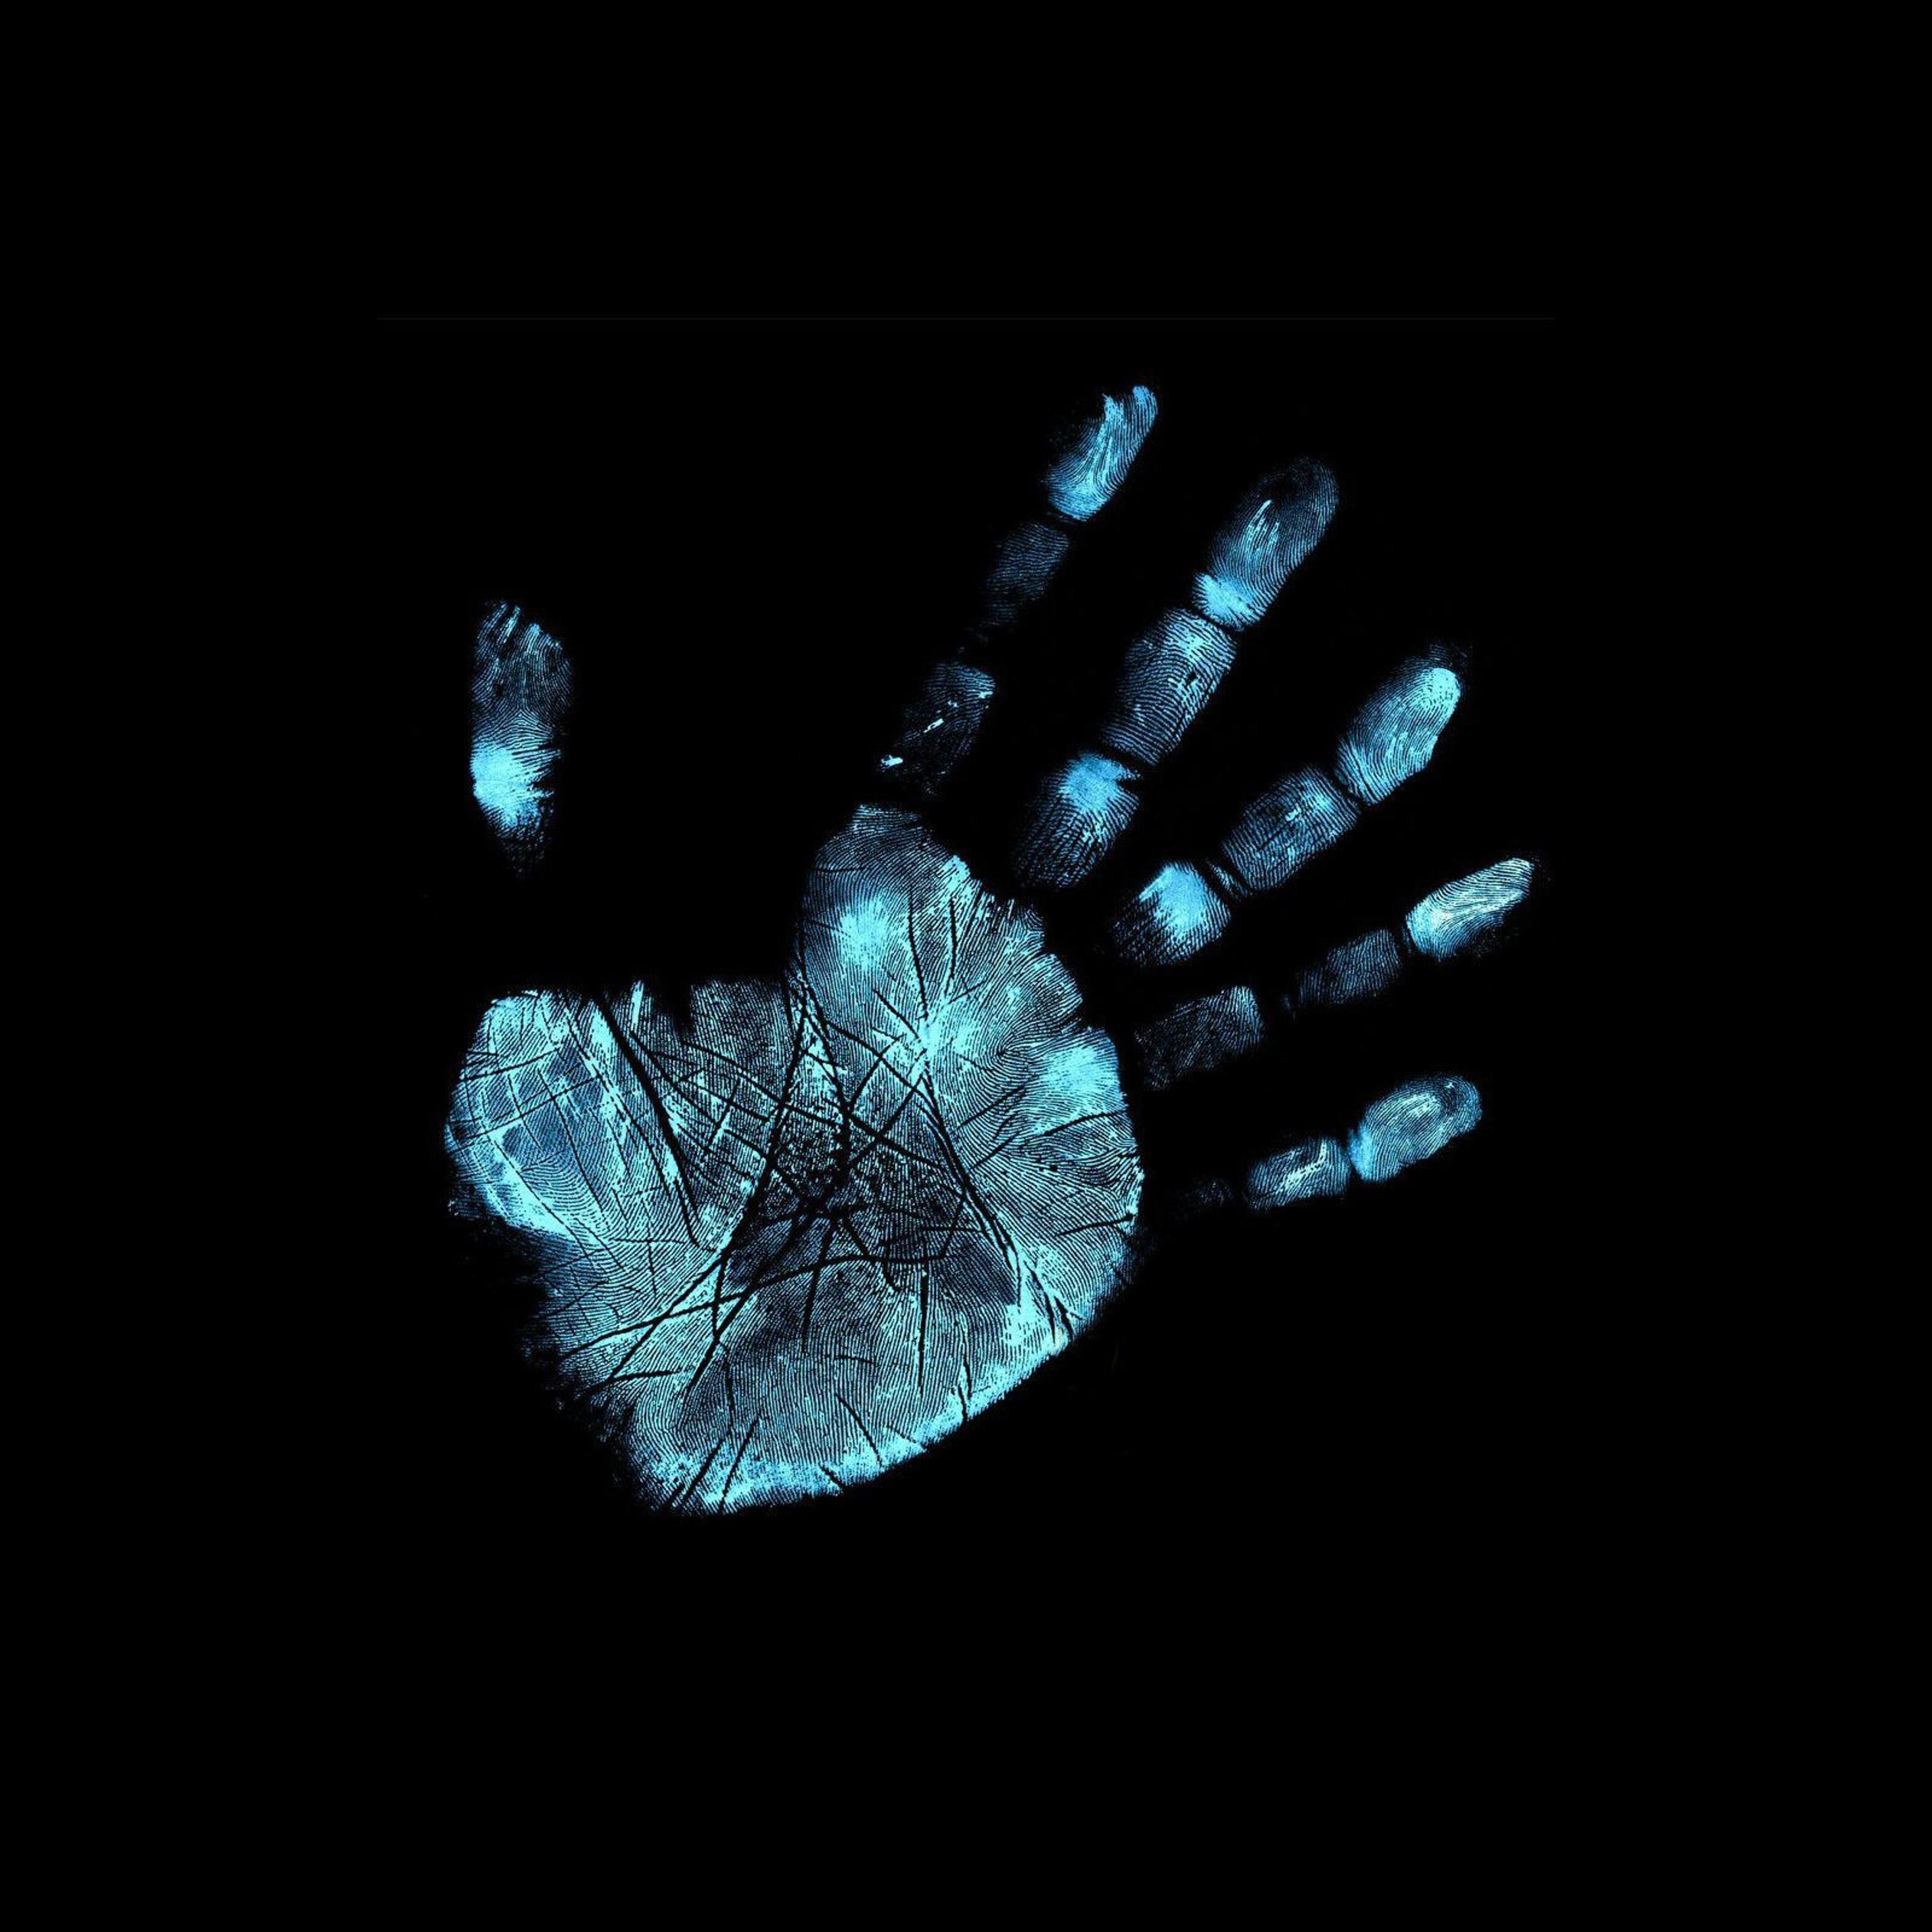 Blue footprint of hand on black background